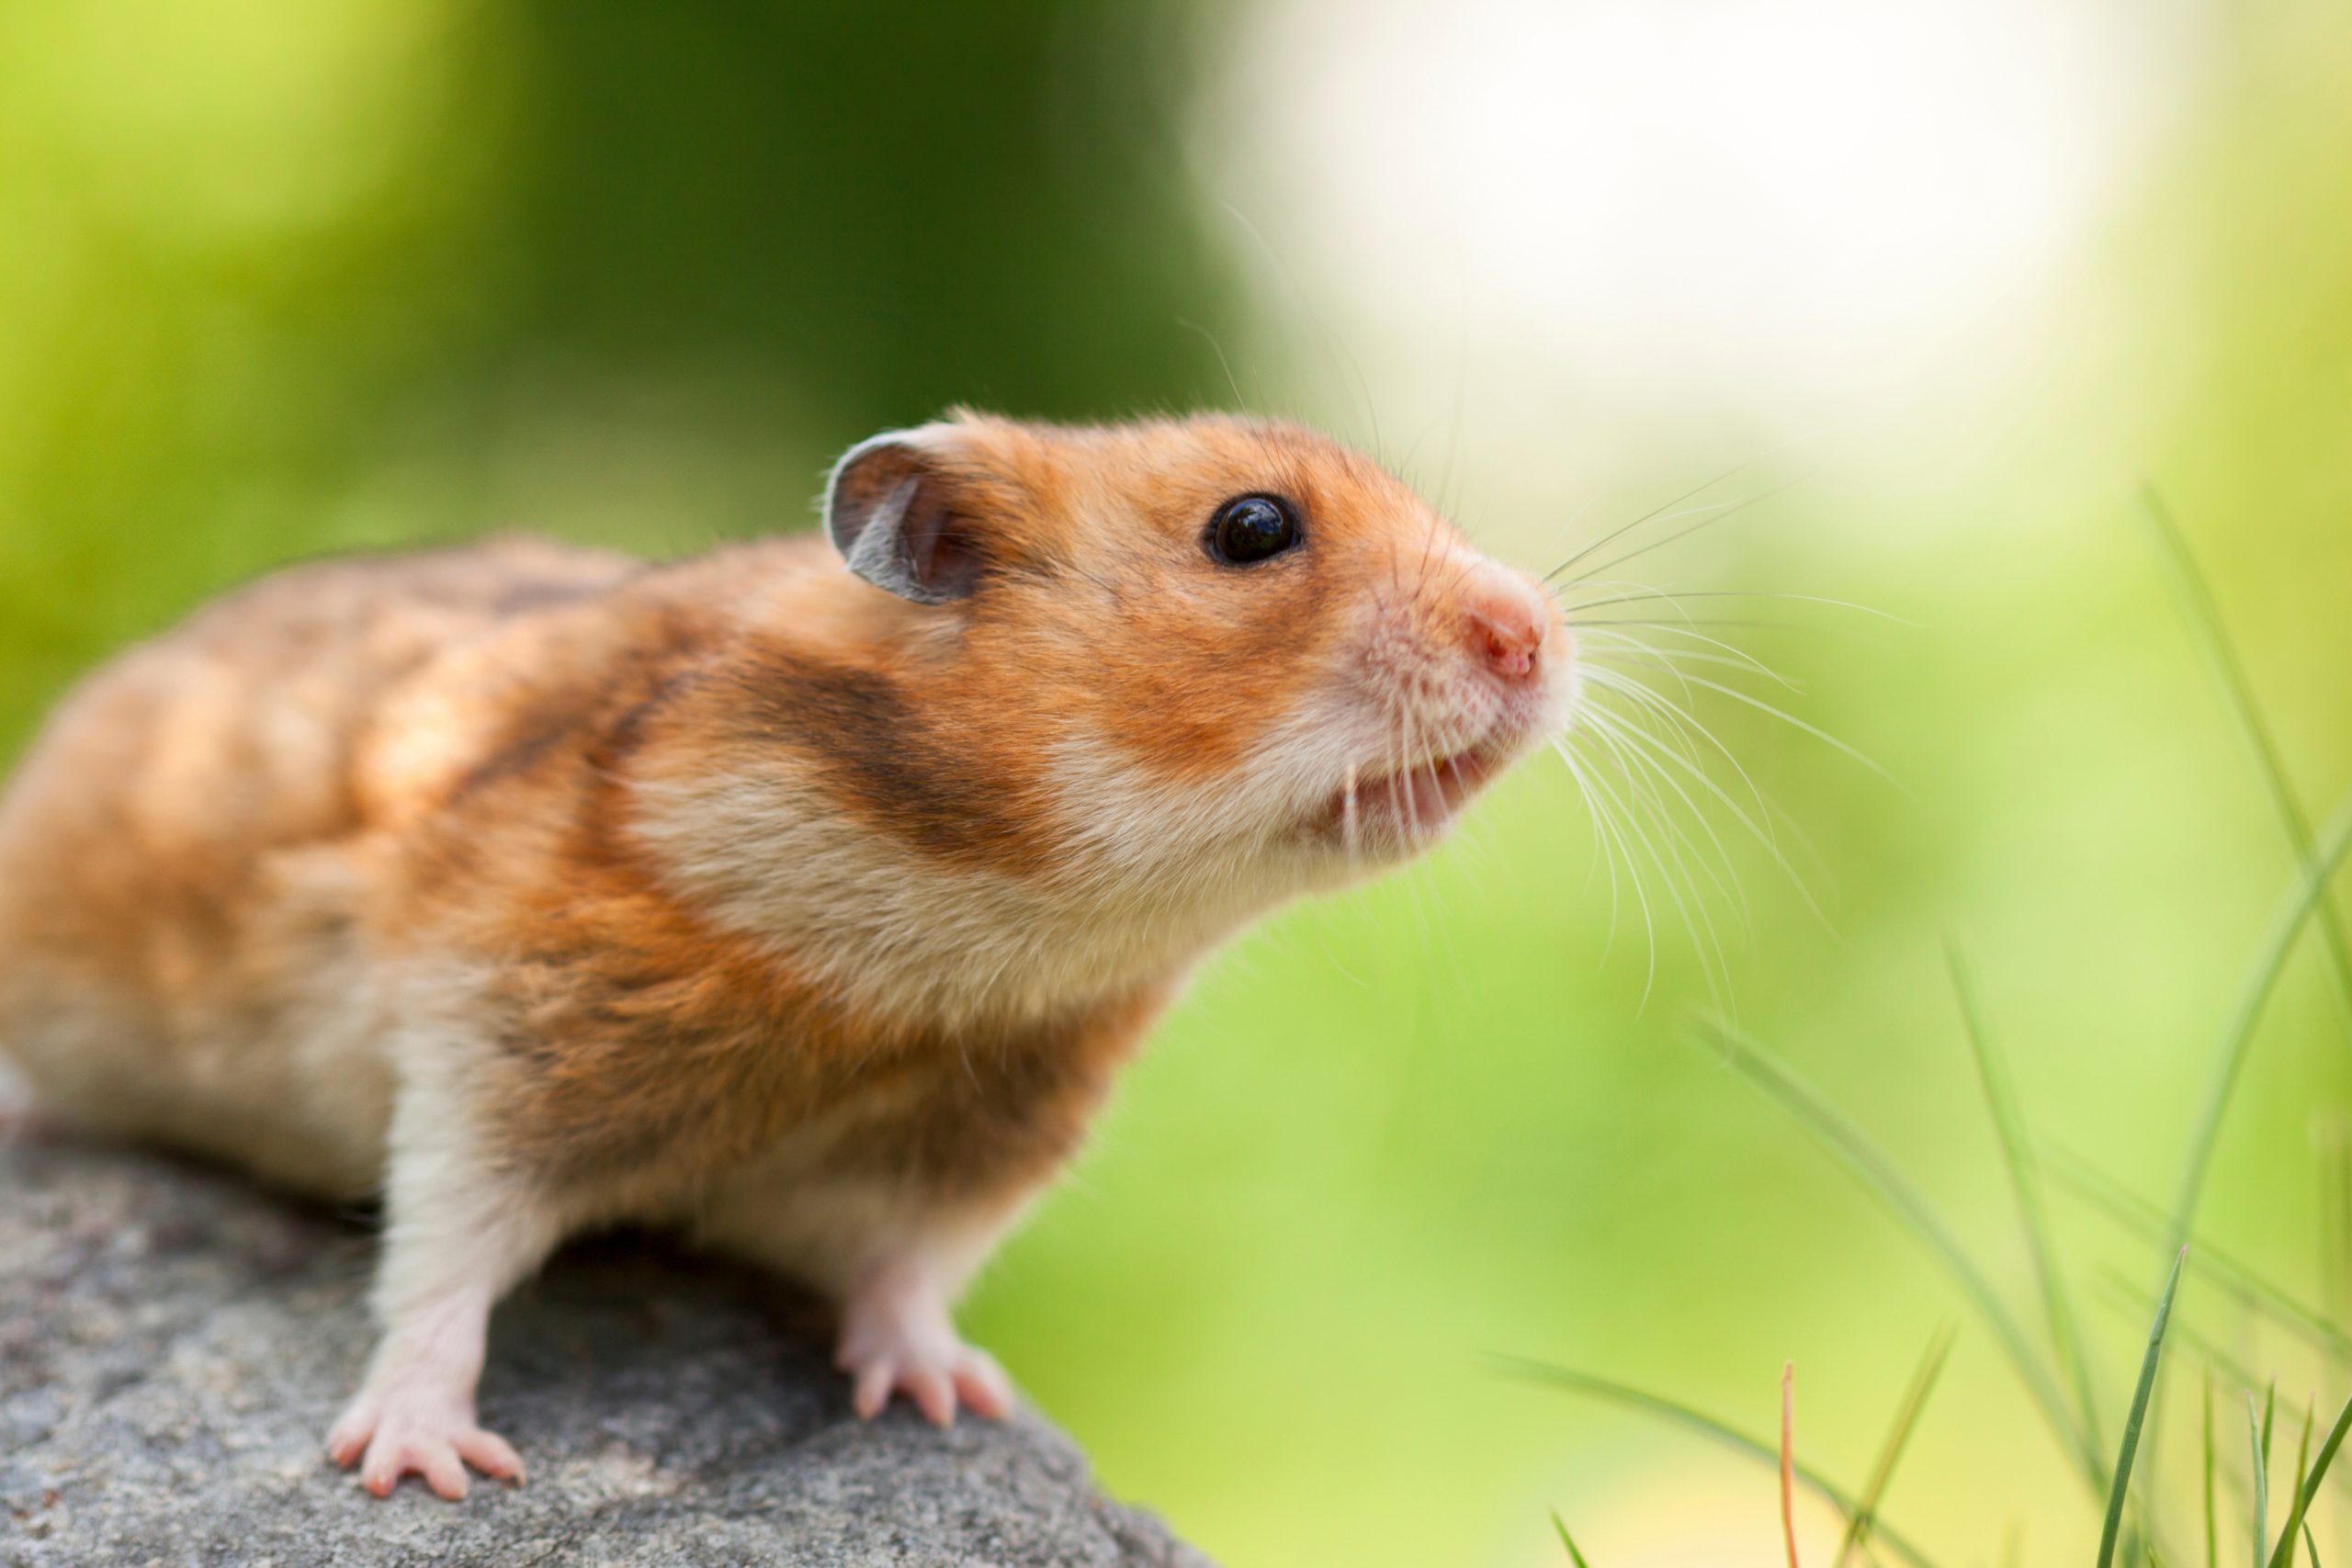 Cute Hamster (Syrian Hamster) on a stone - seine Träume verstehen. - Kaya